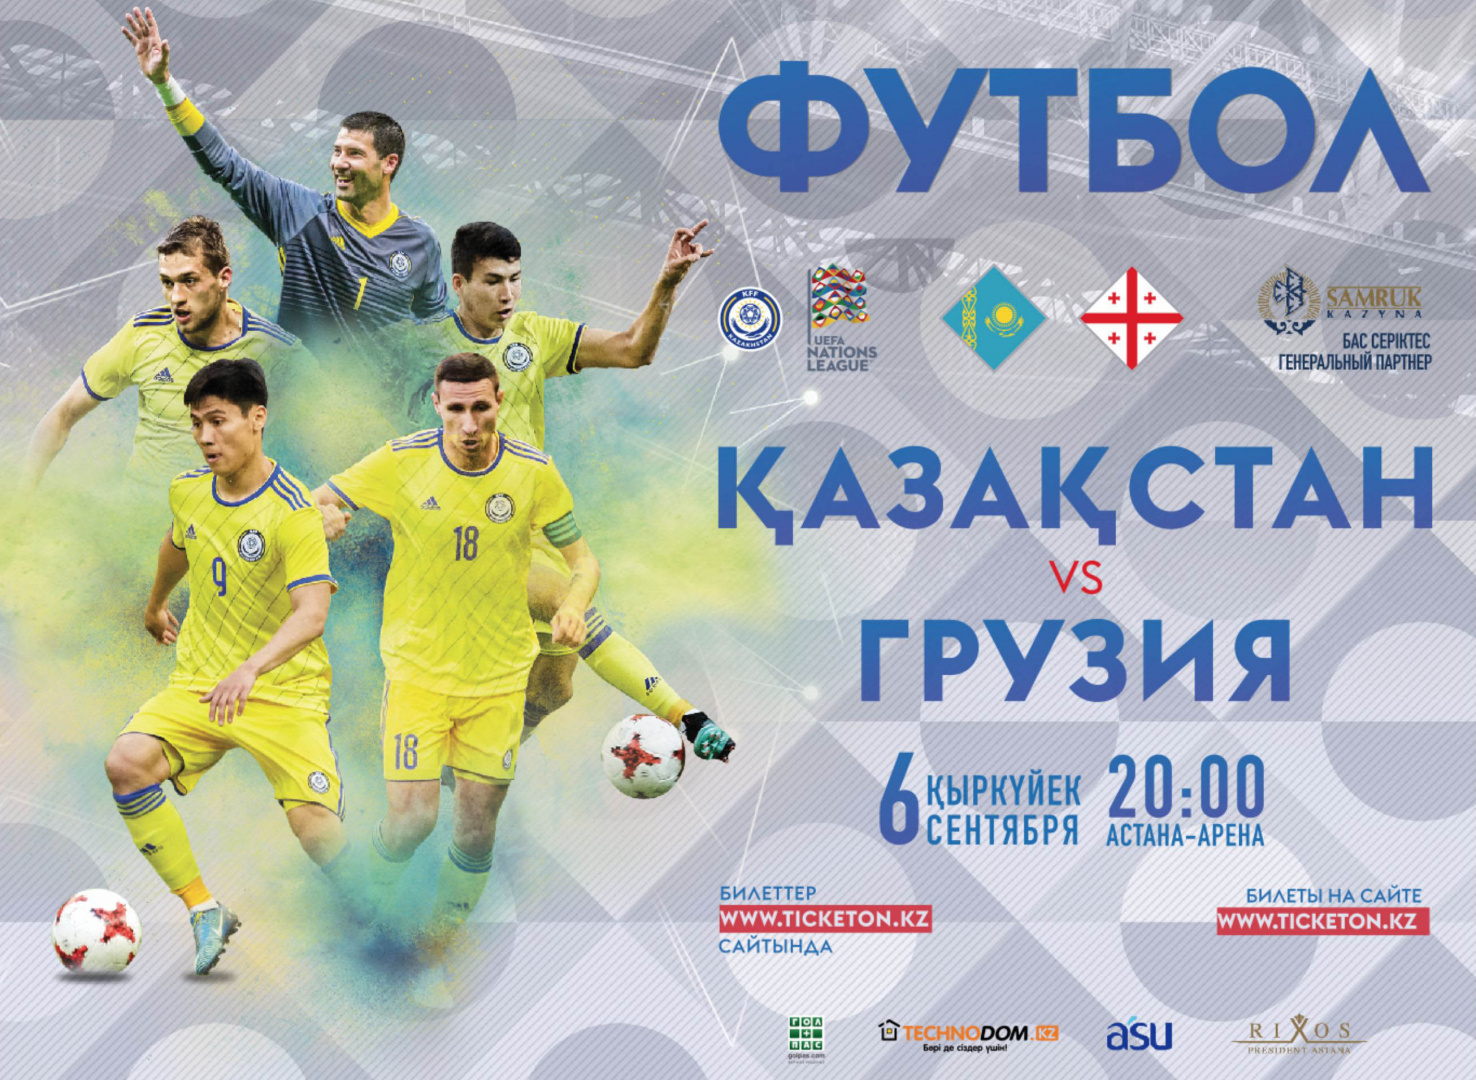 Уефа билеты. Билет на футбол. Грузия Казахстан билеты. Логотип сборной Казахстана. Билет на спортивное мероприятие.